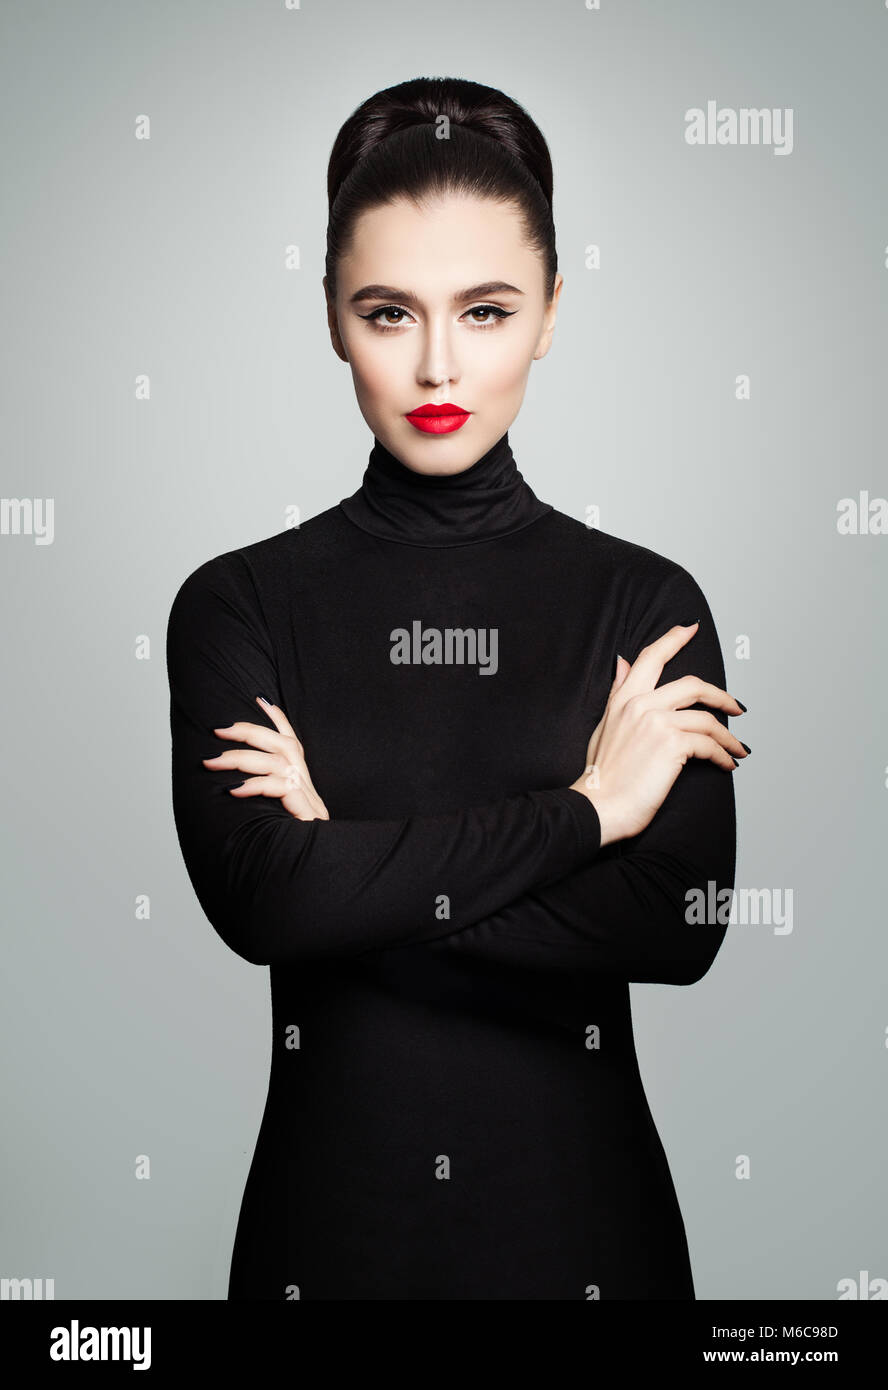 Perfect Young Model Woman wearing Black Roll Neck Dress, Fashion Studio Female Portrait Stock Photo